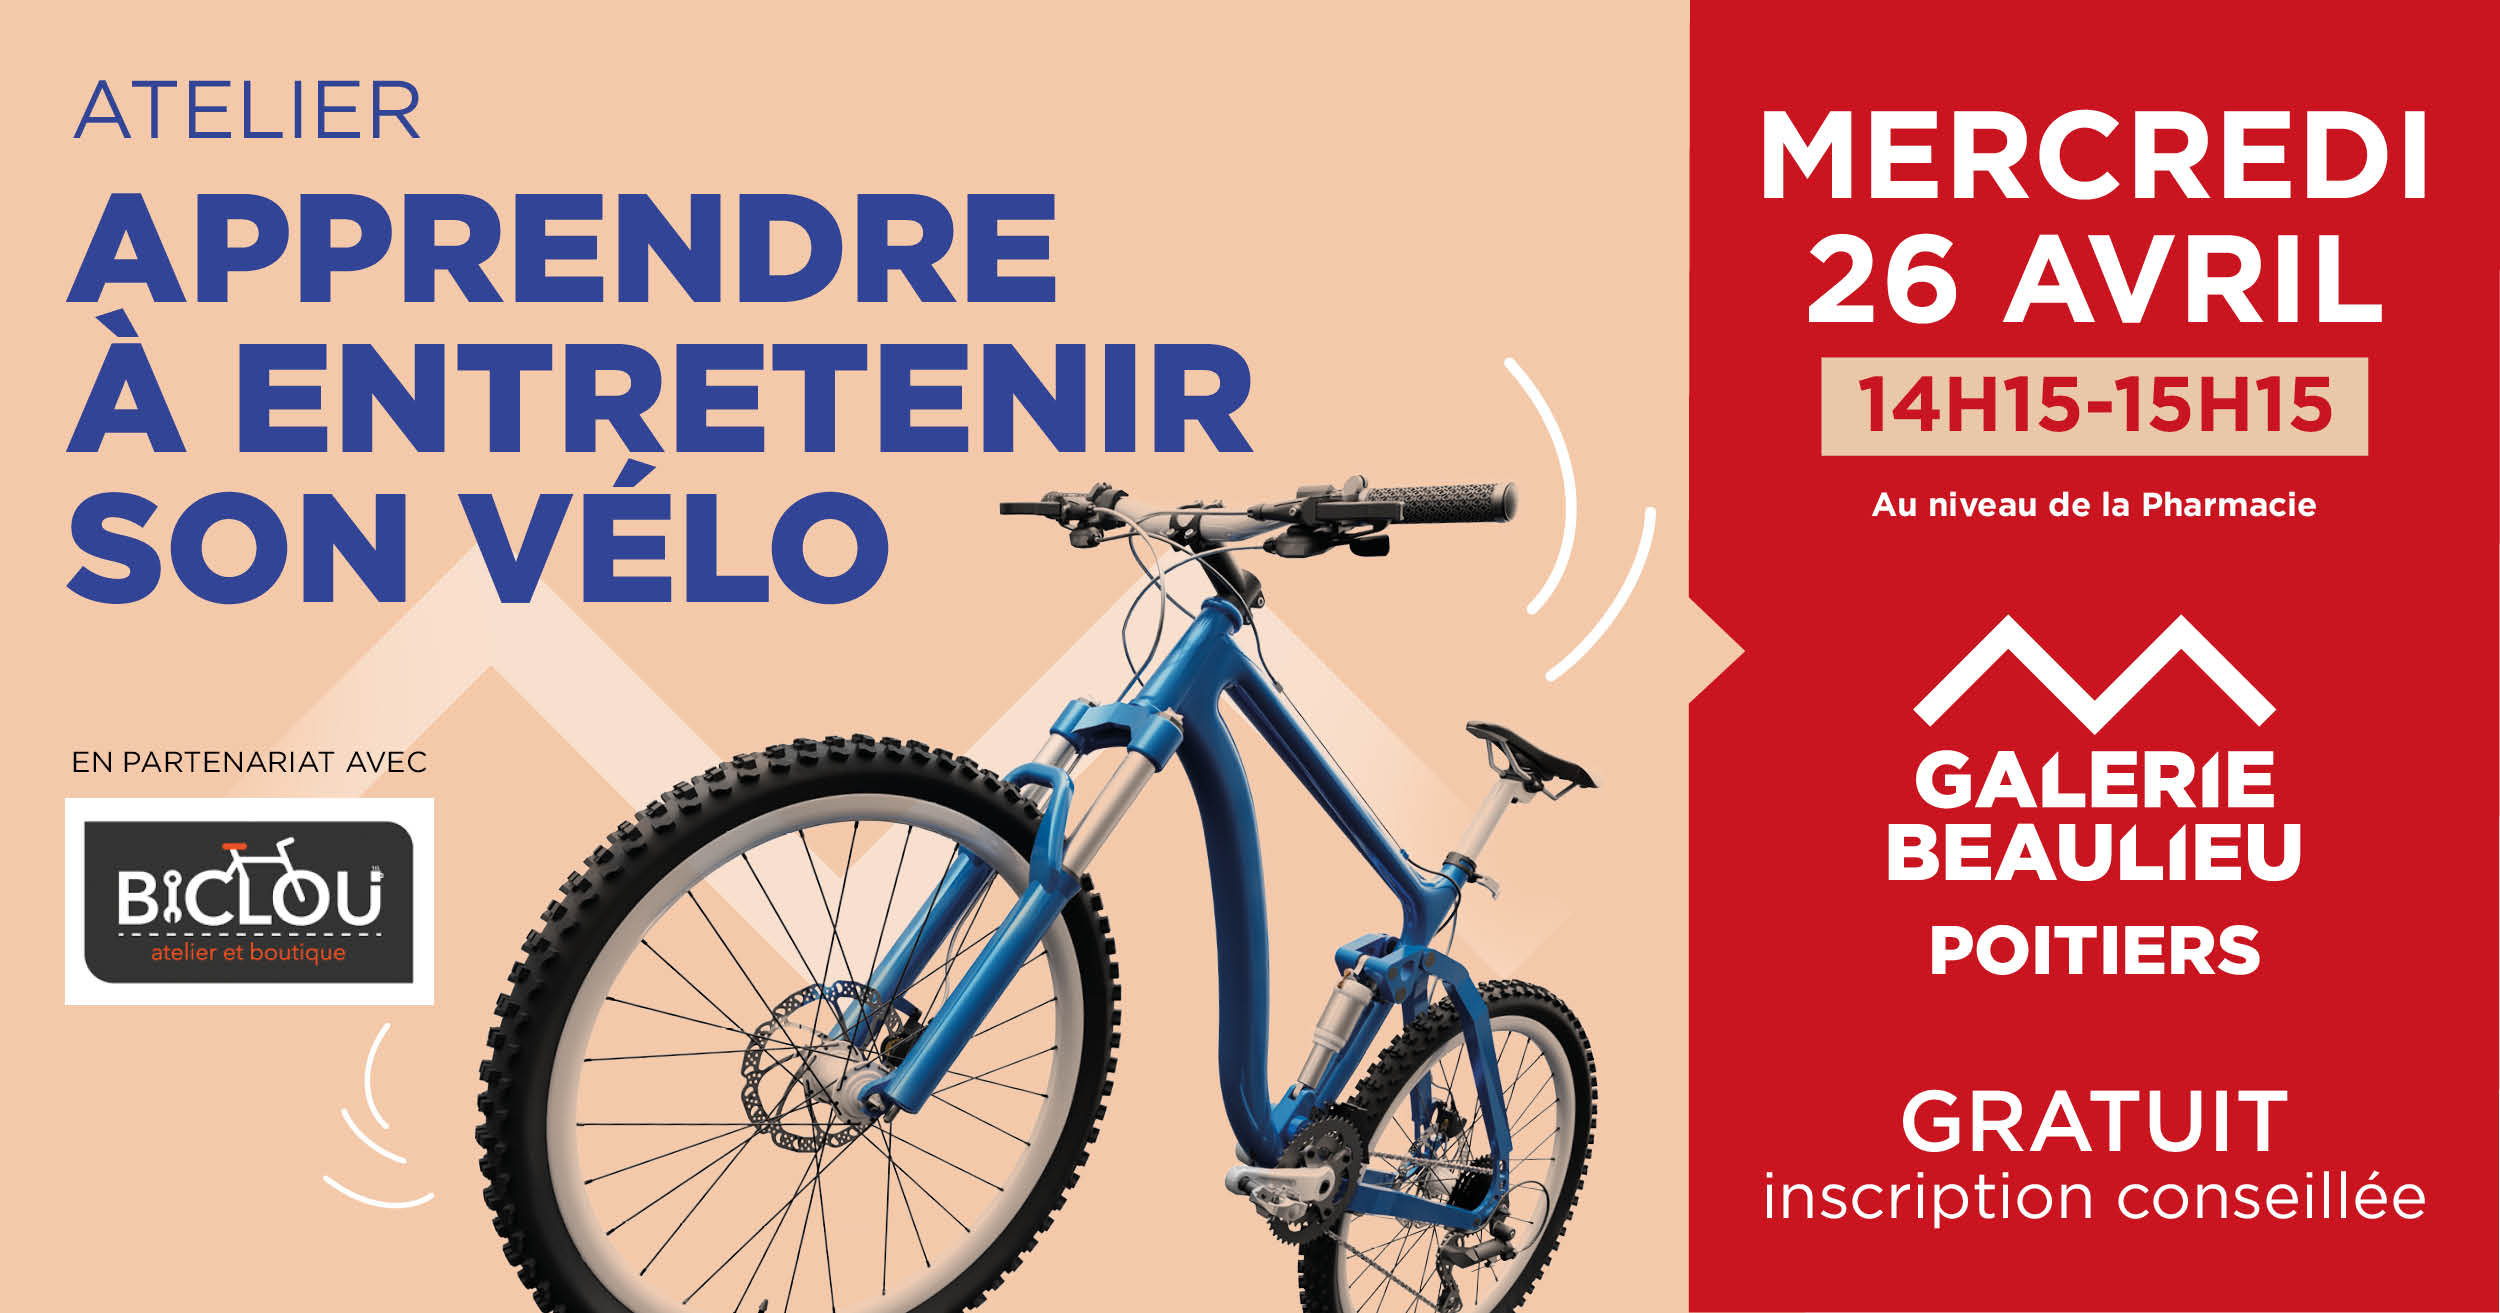 Apprendre à entretenir son vélo - Biclou - Galerie Beaulieu Poitiers